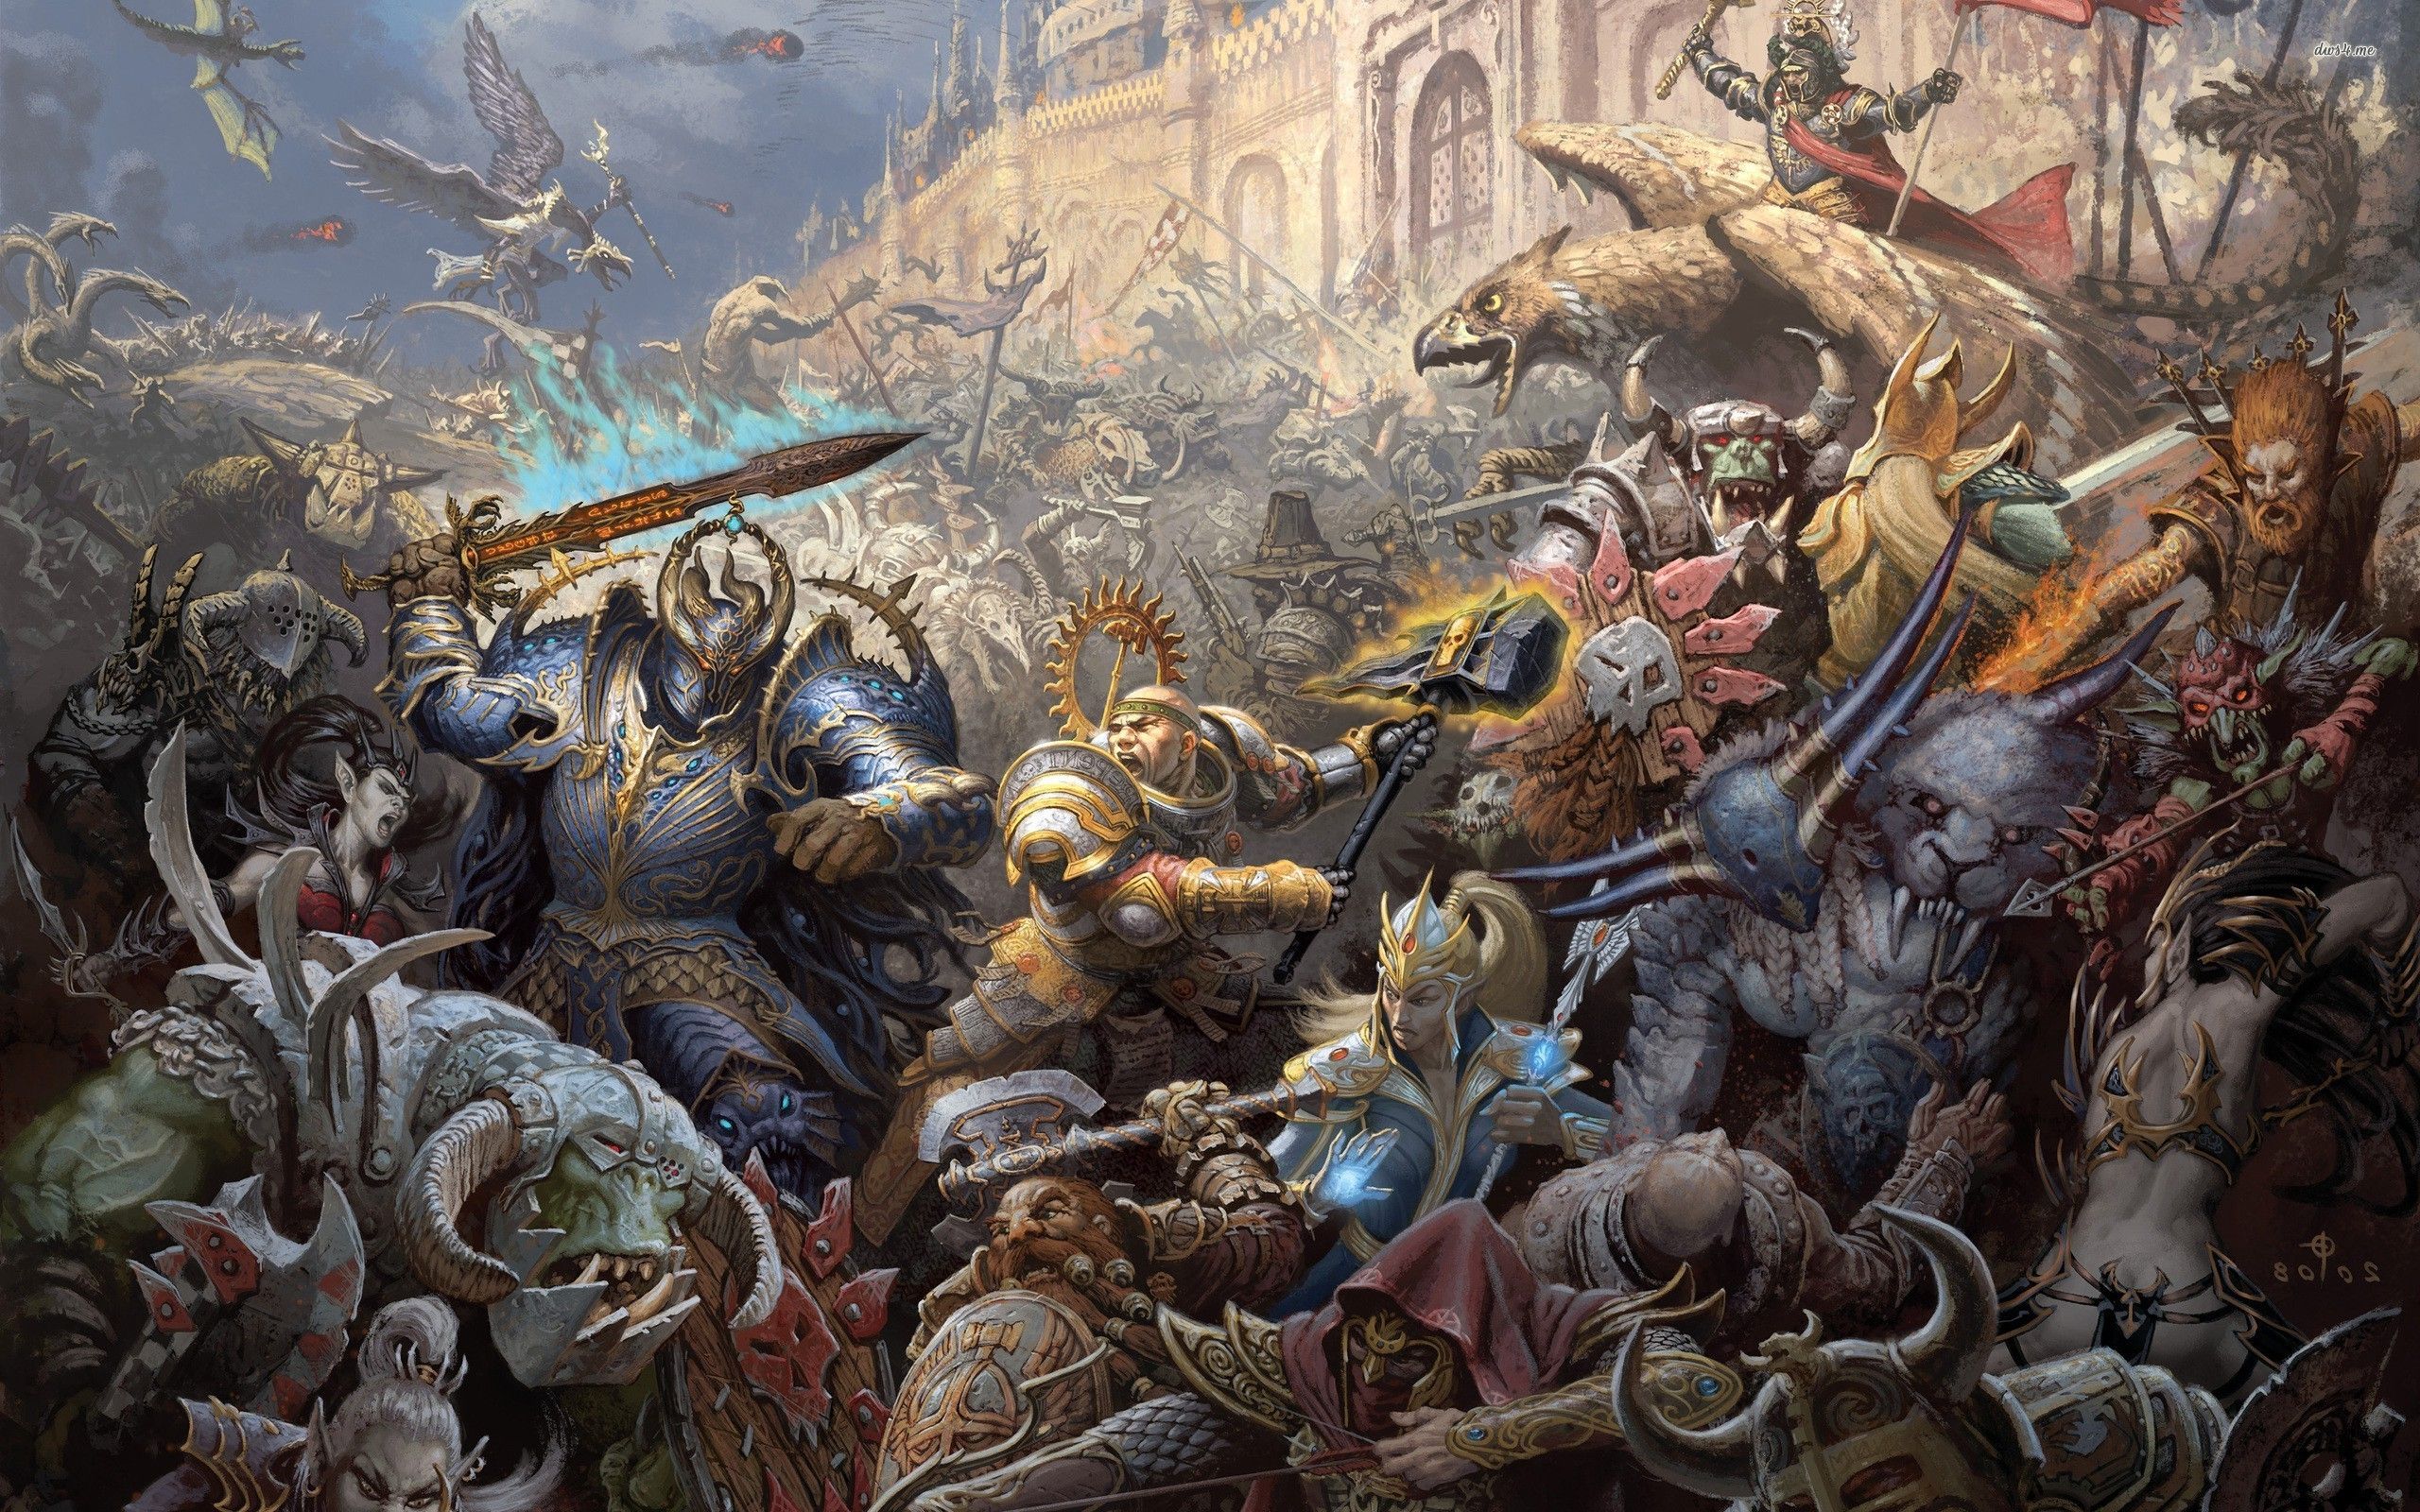 Warhammer Age Of Sigmar HD Wallpaper